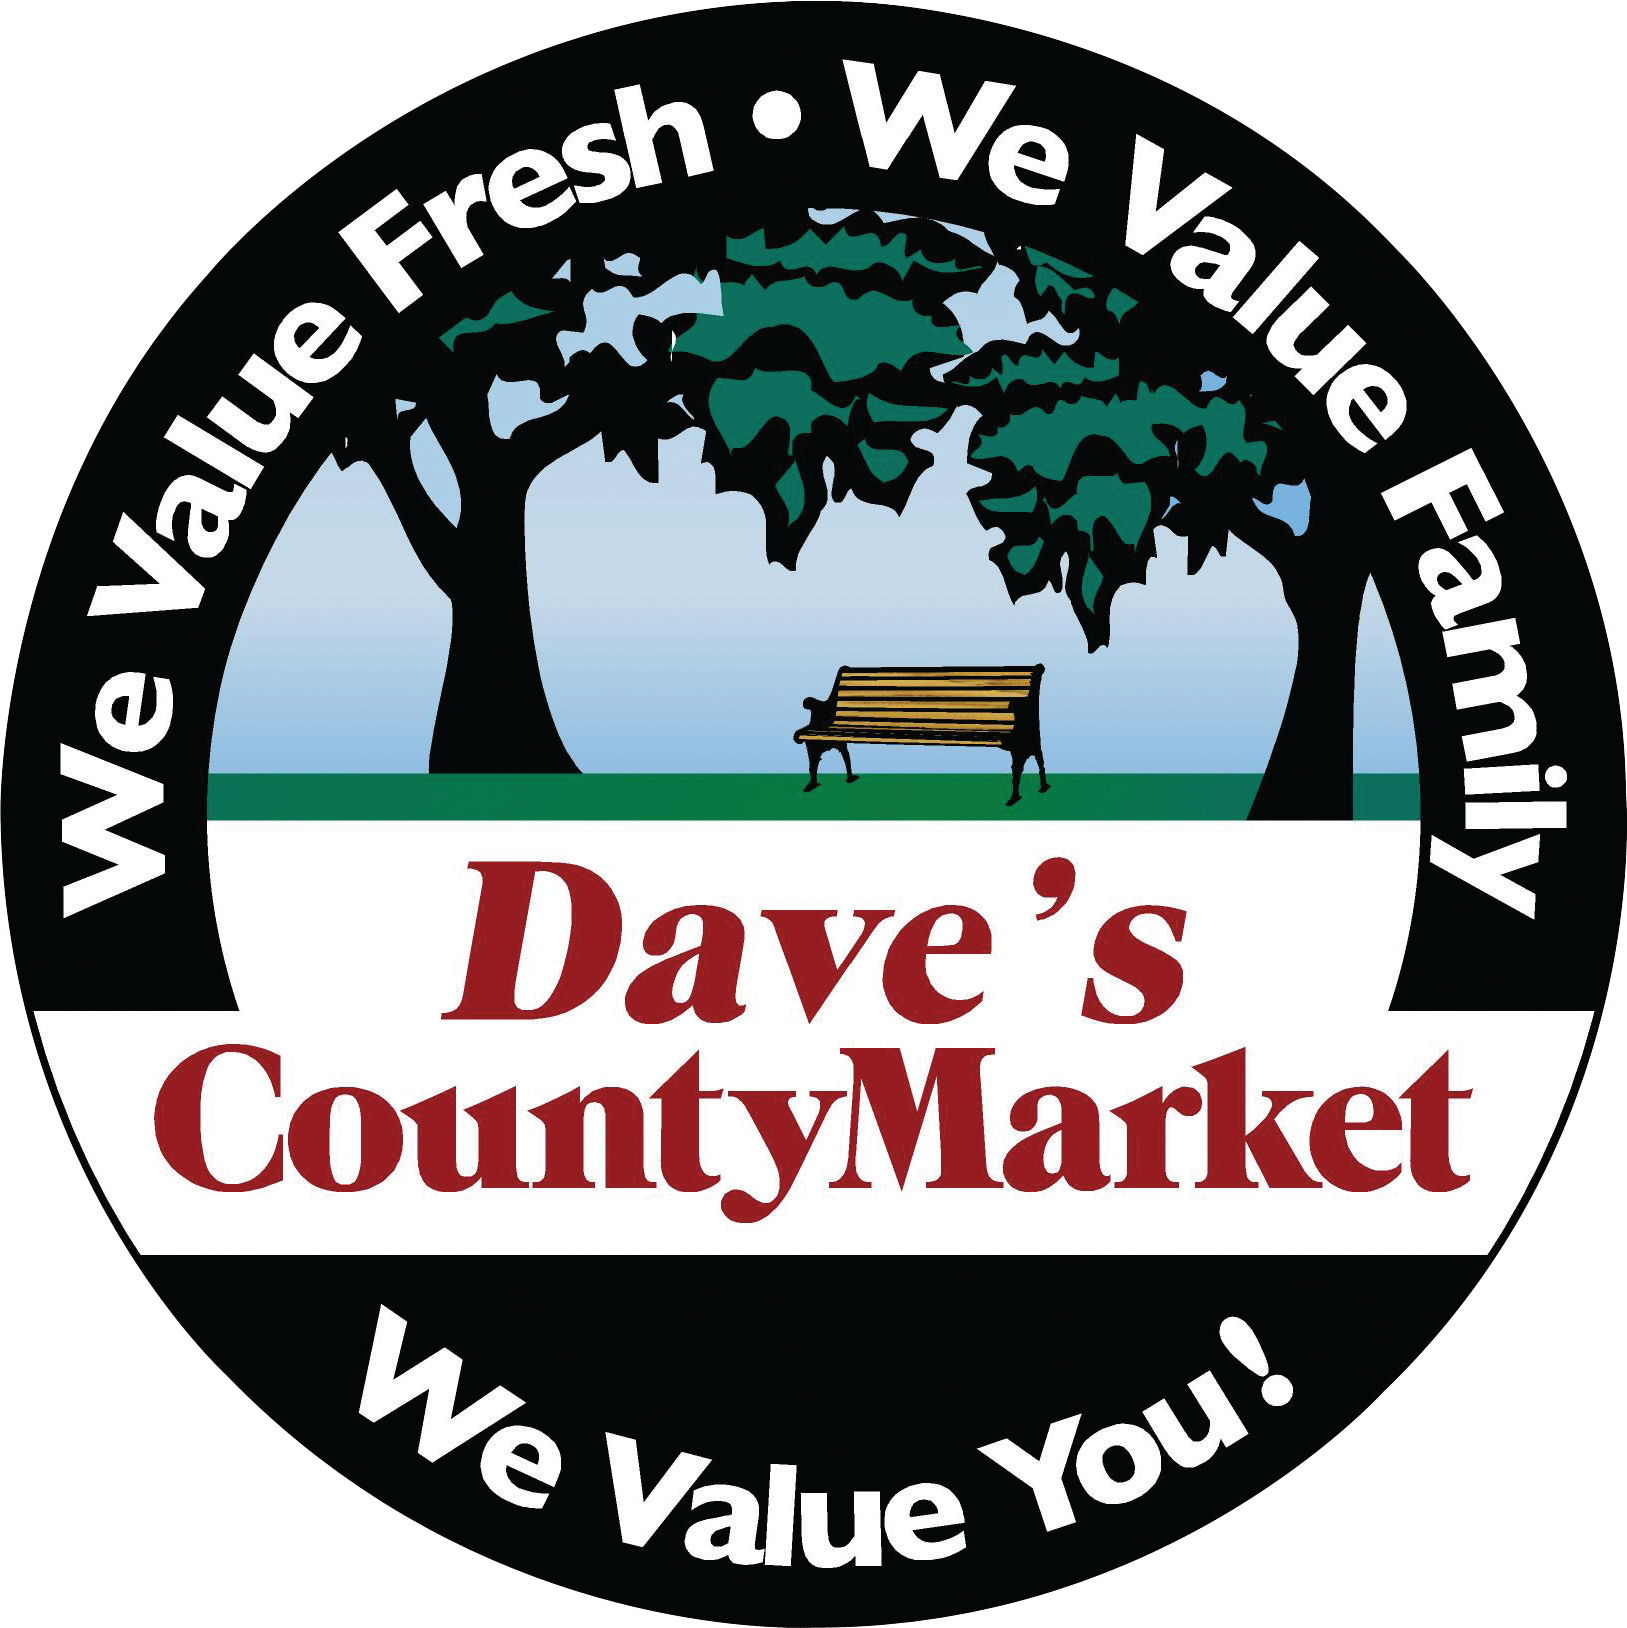 Dave's CountyMarket